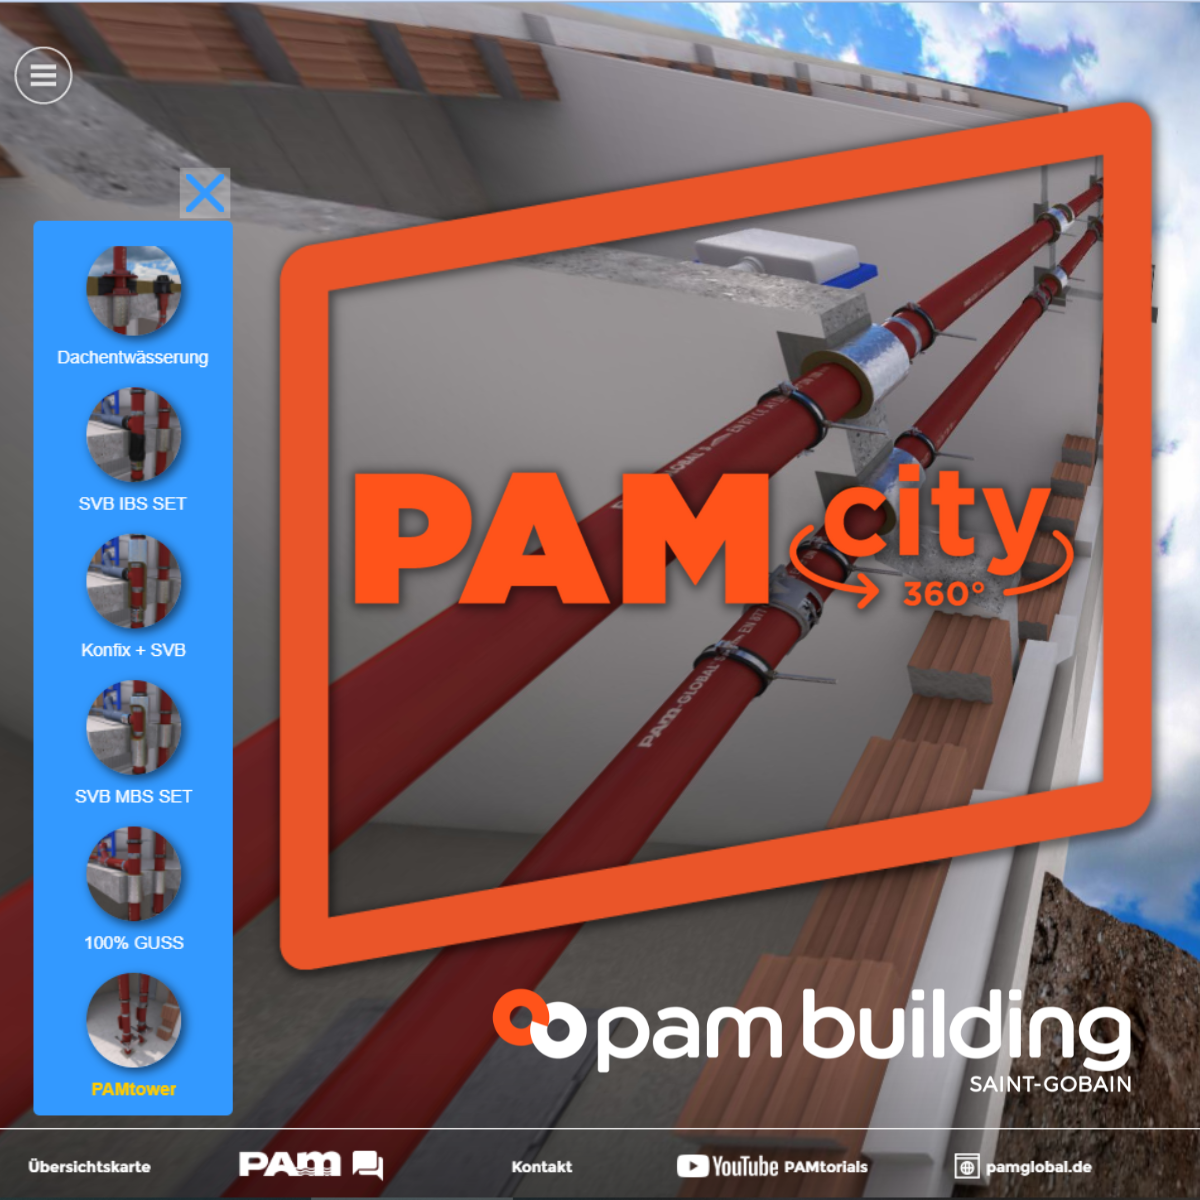 Visit PAMcity